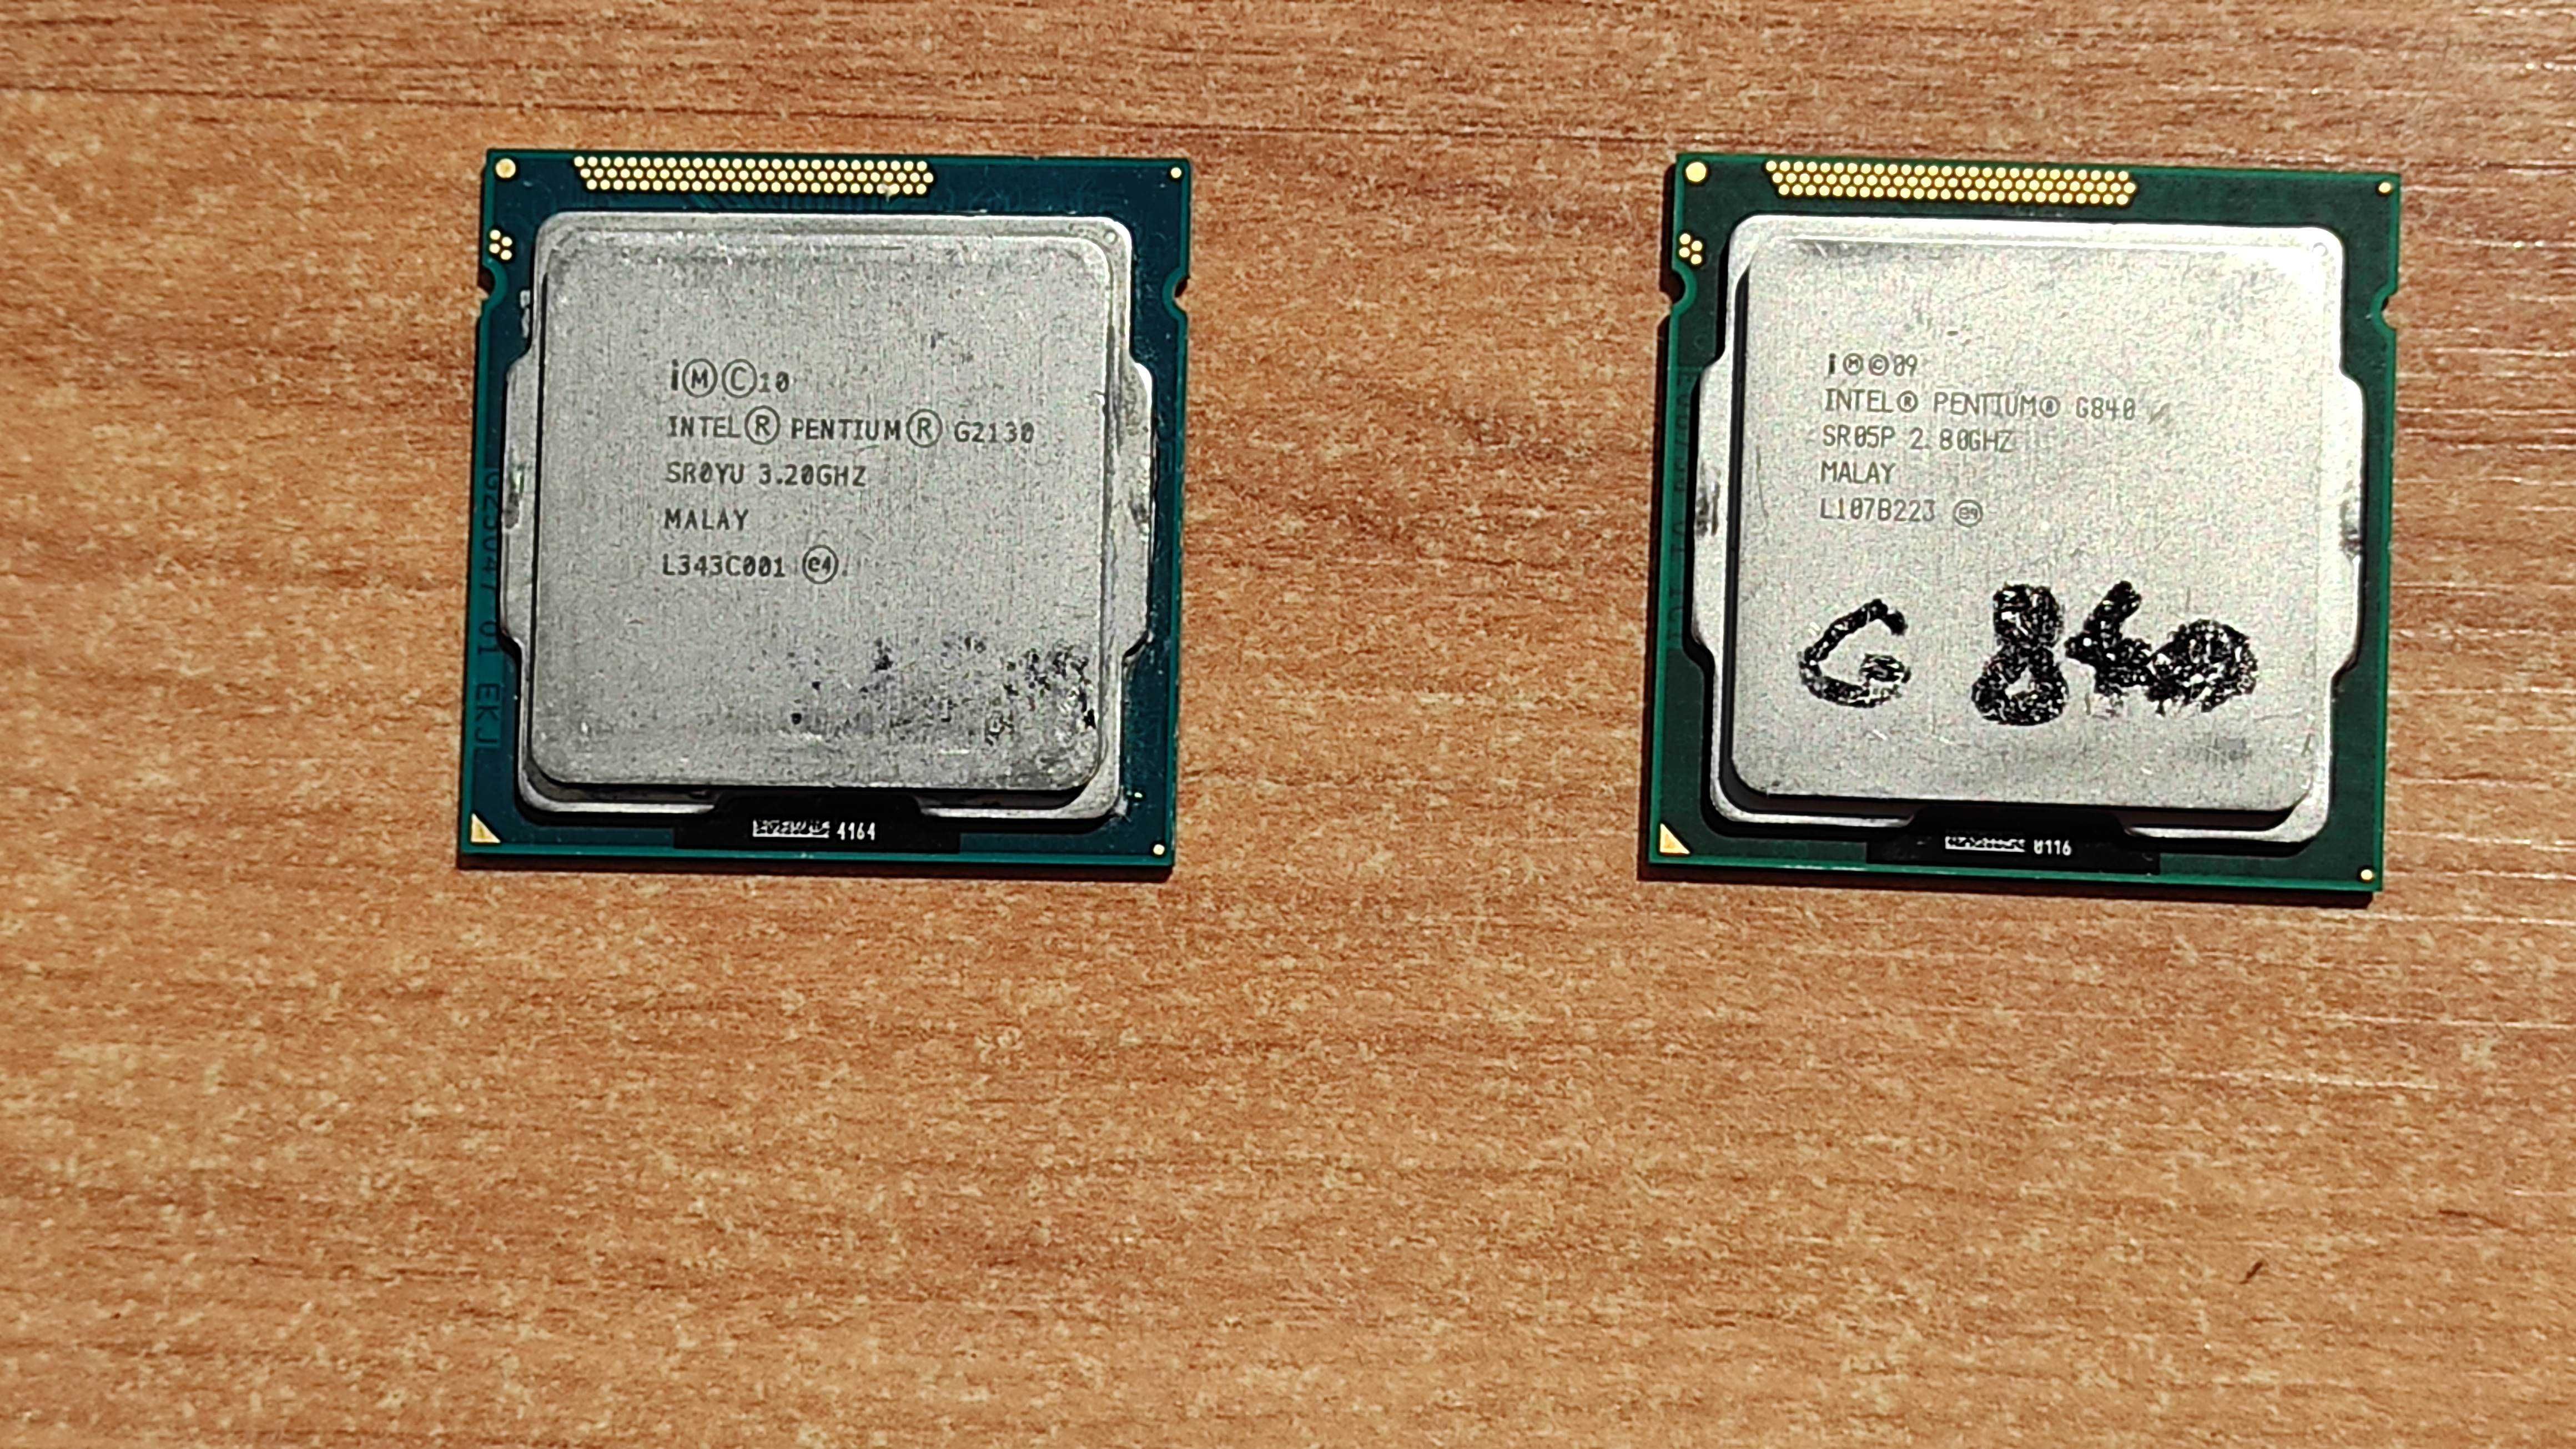 procesor g2130 si g840 soket 1155 si 1150 dual core Intel gen 3 si 4